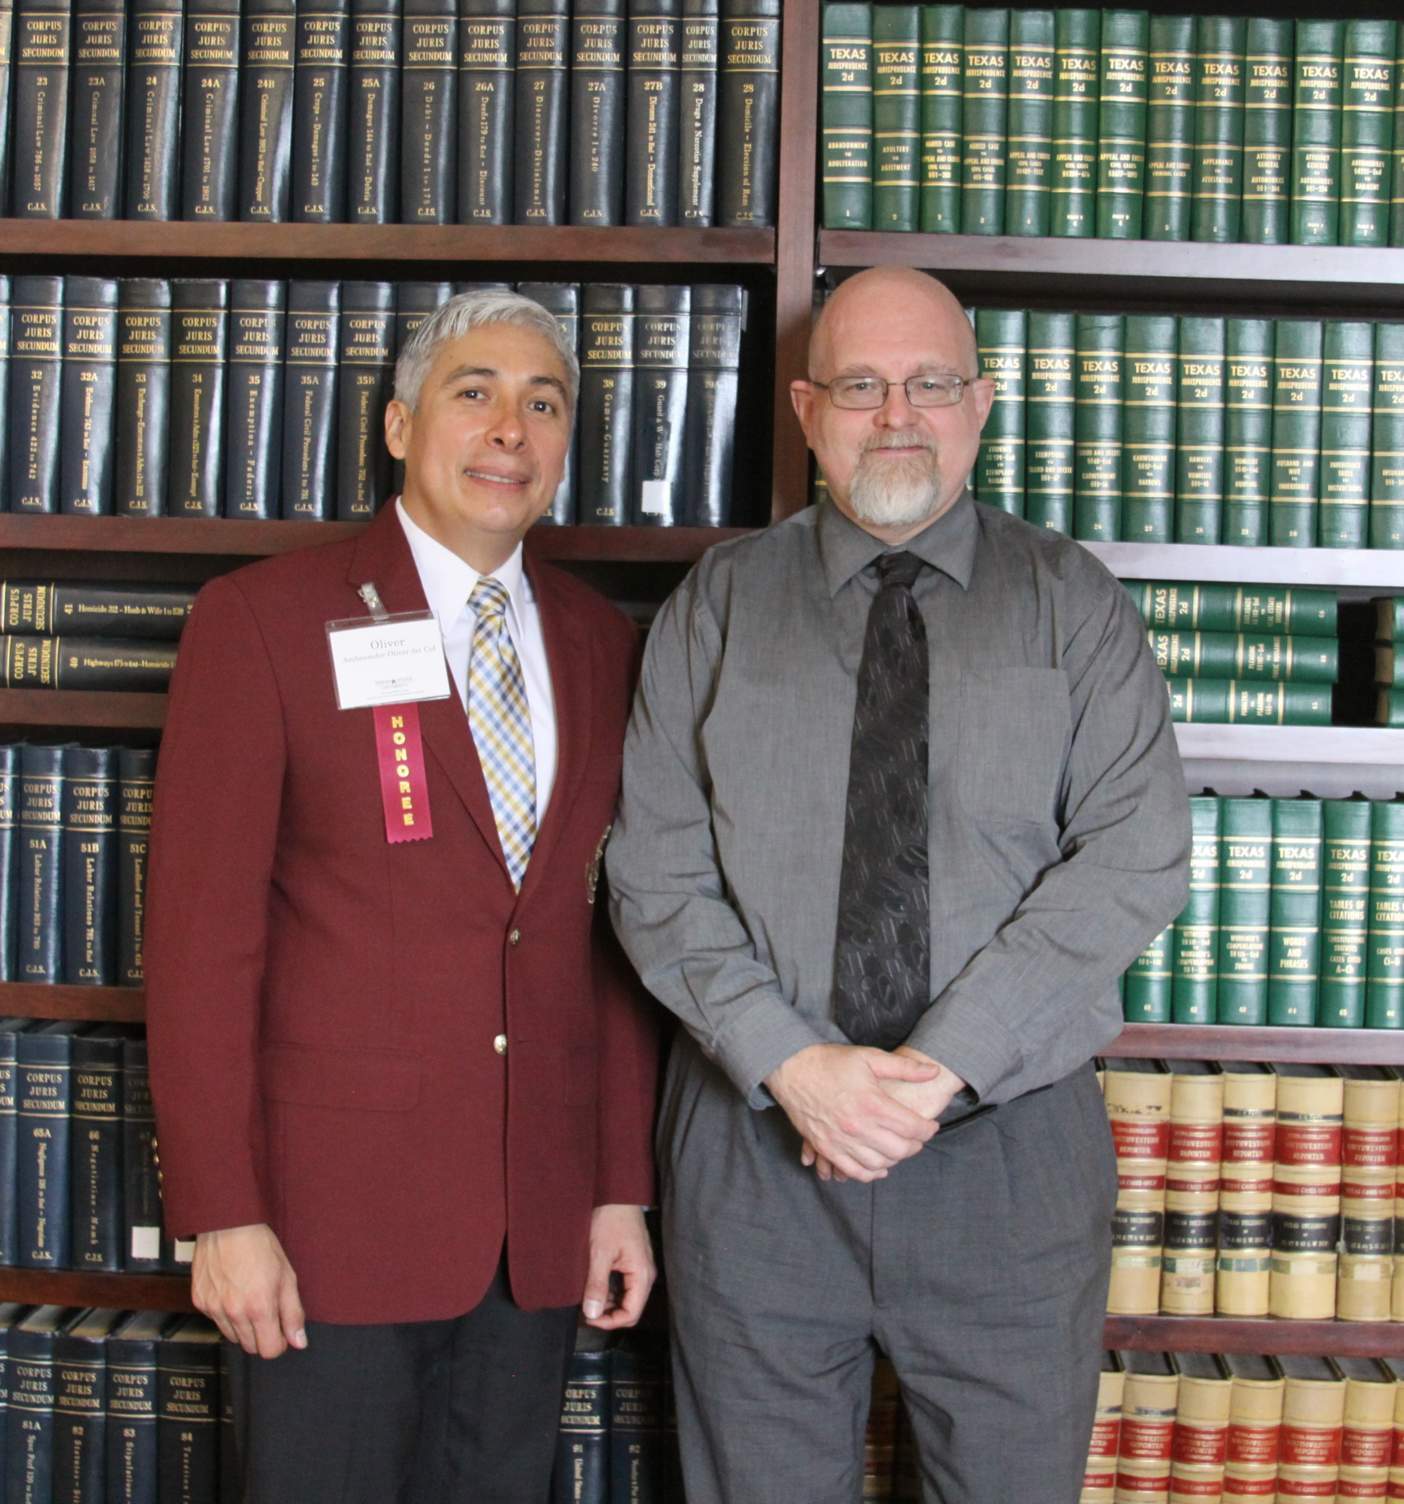 Ambassador Del Cid and his former professor Dr. Edward Mihalkanin